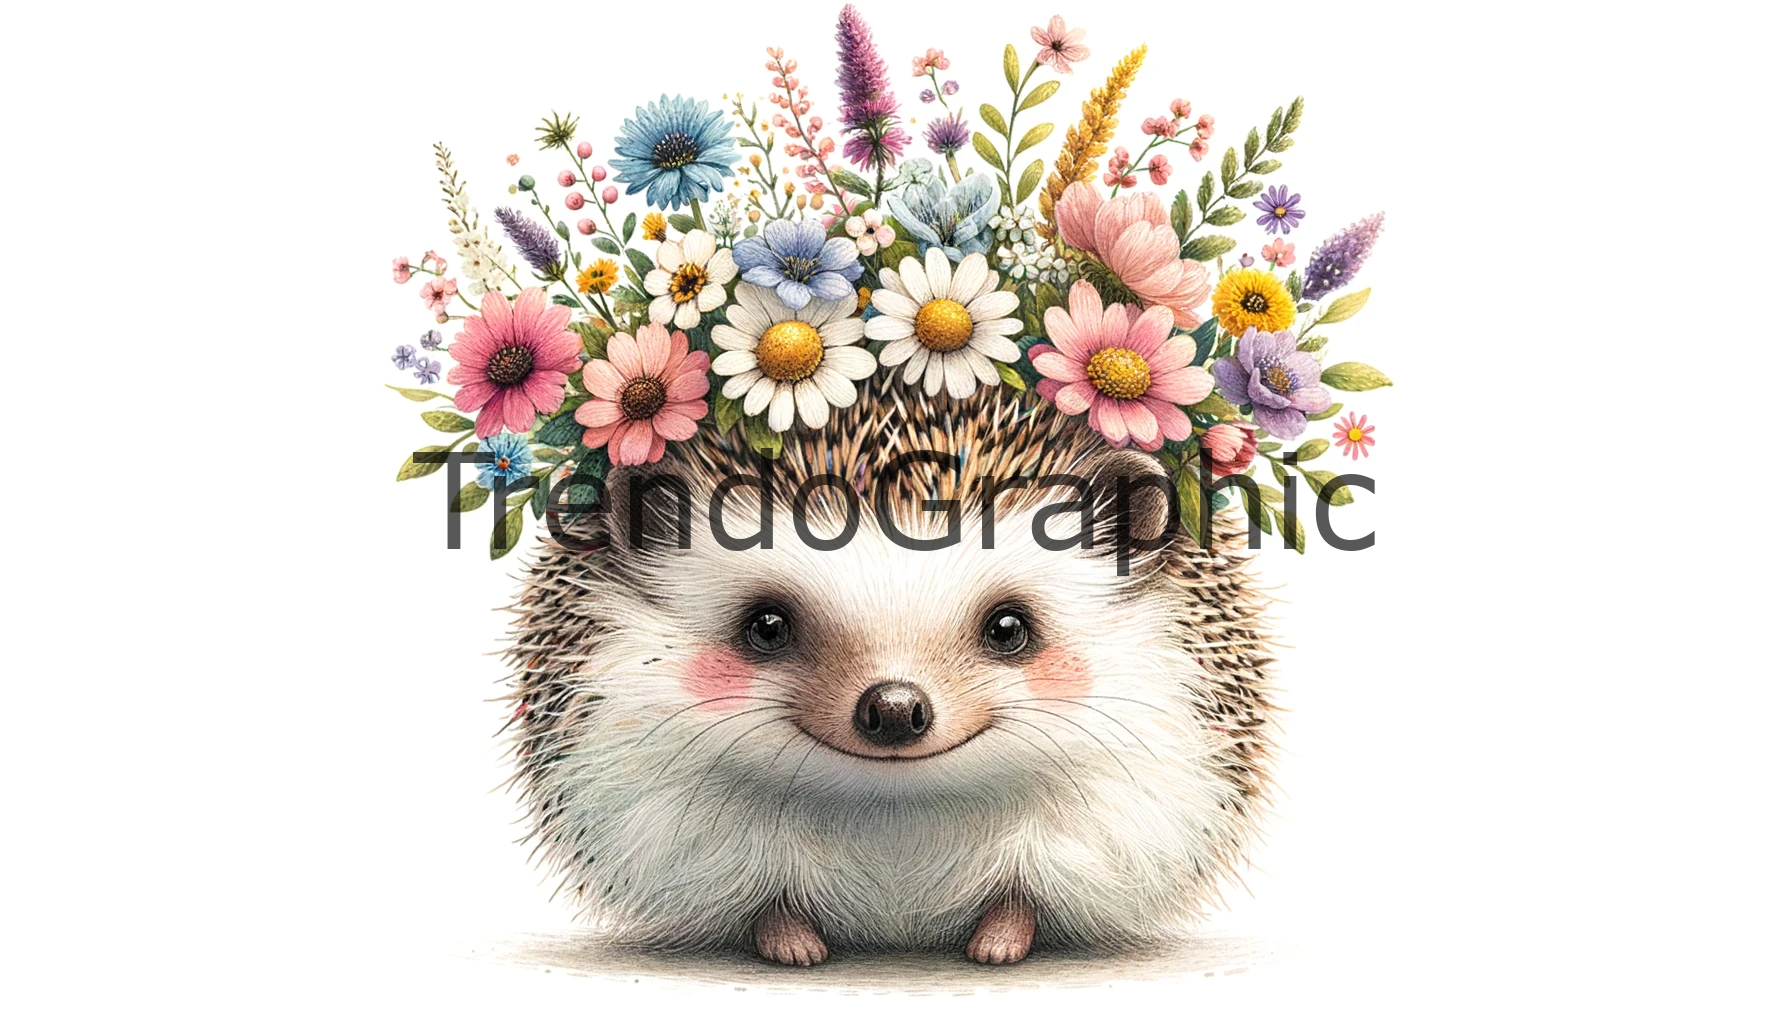 Enchanting Hedgehog Adorned with a Flower Crown